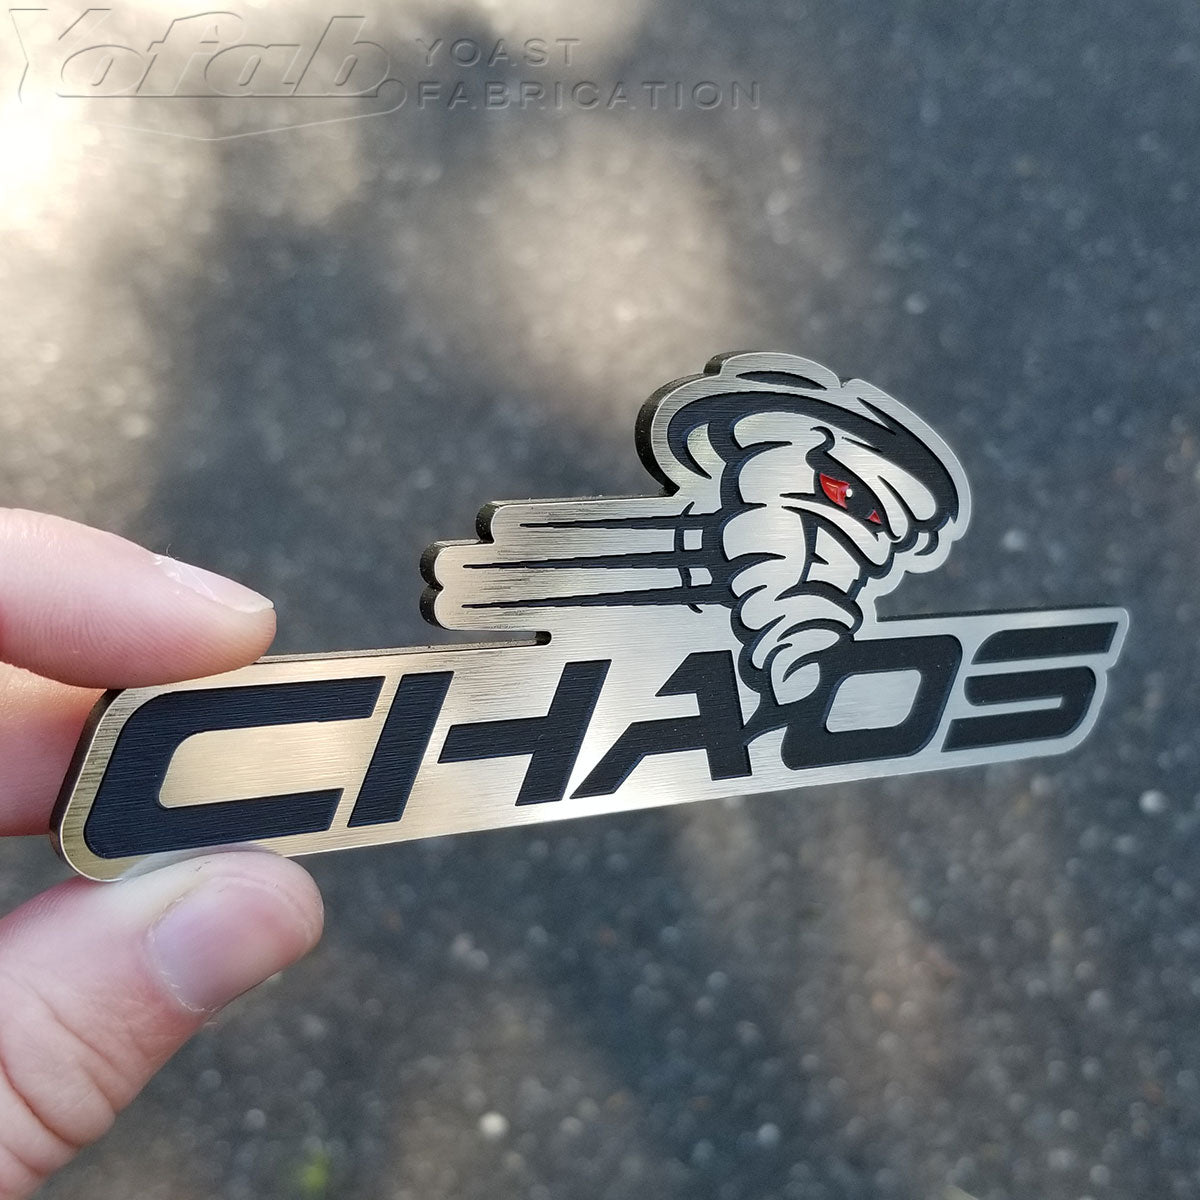 Chaos-Emblem 1970 Dod Charger RT